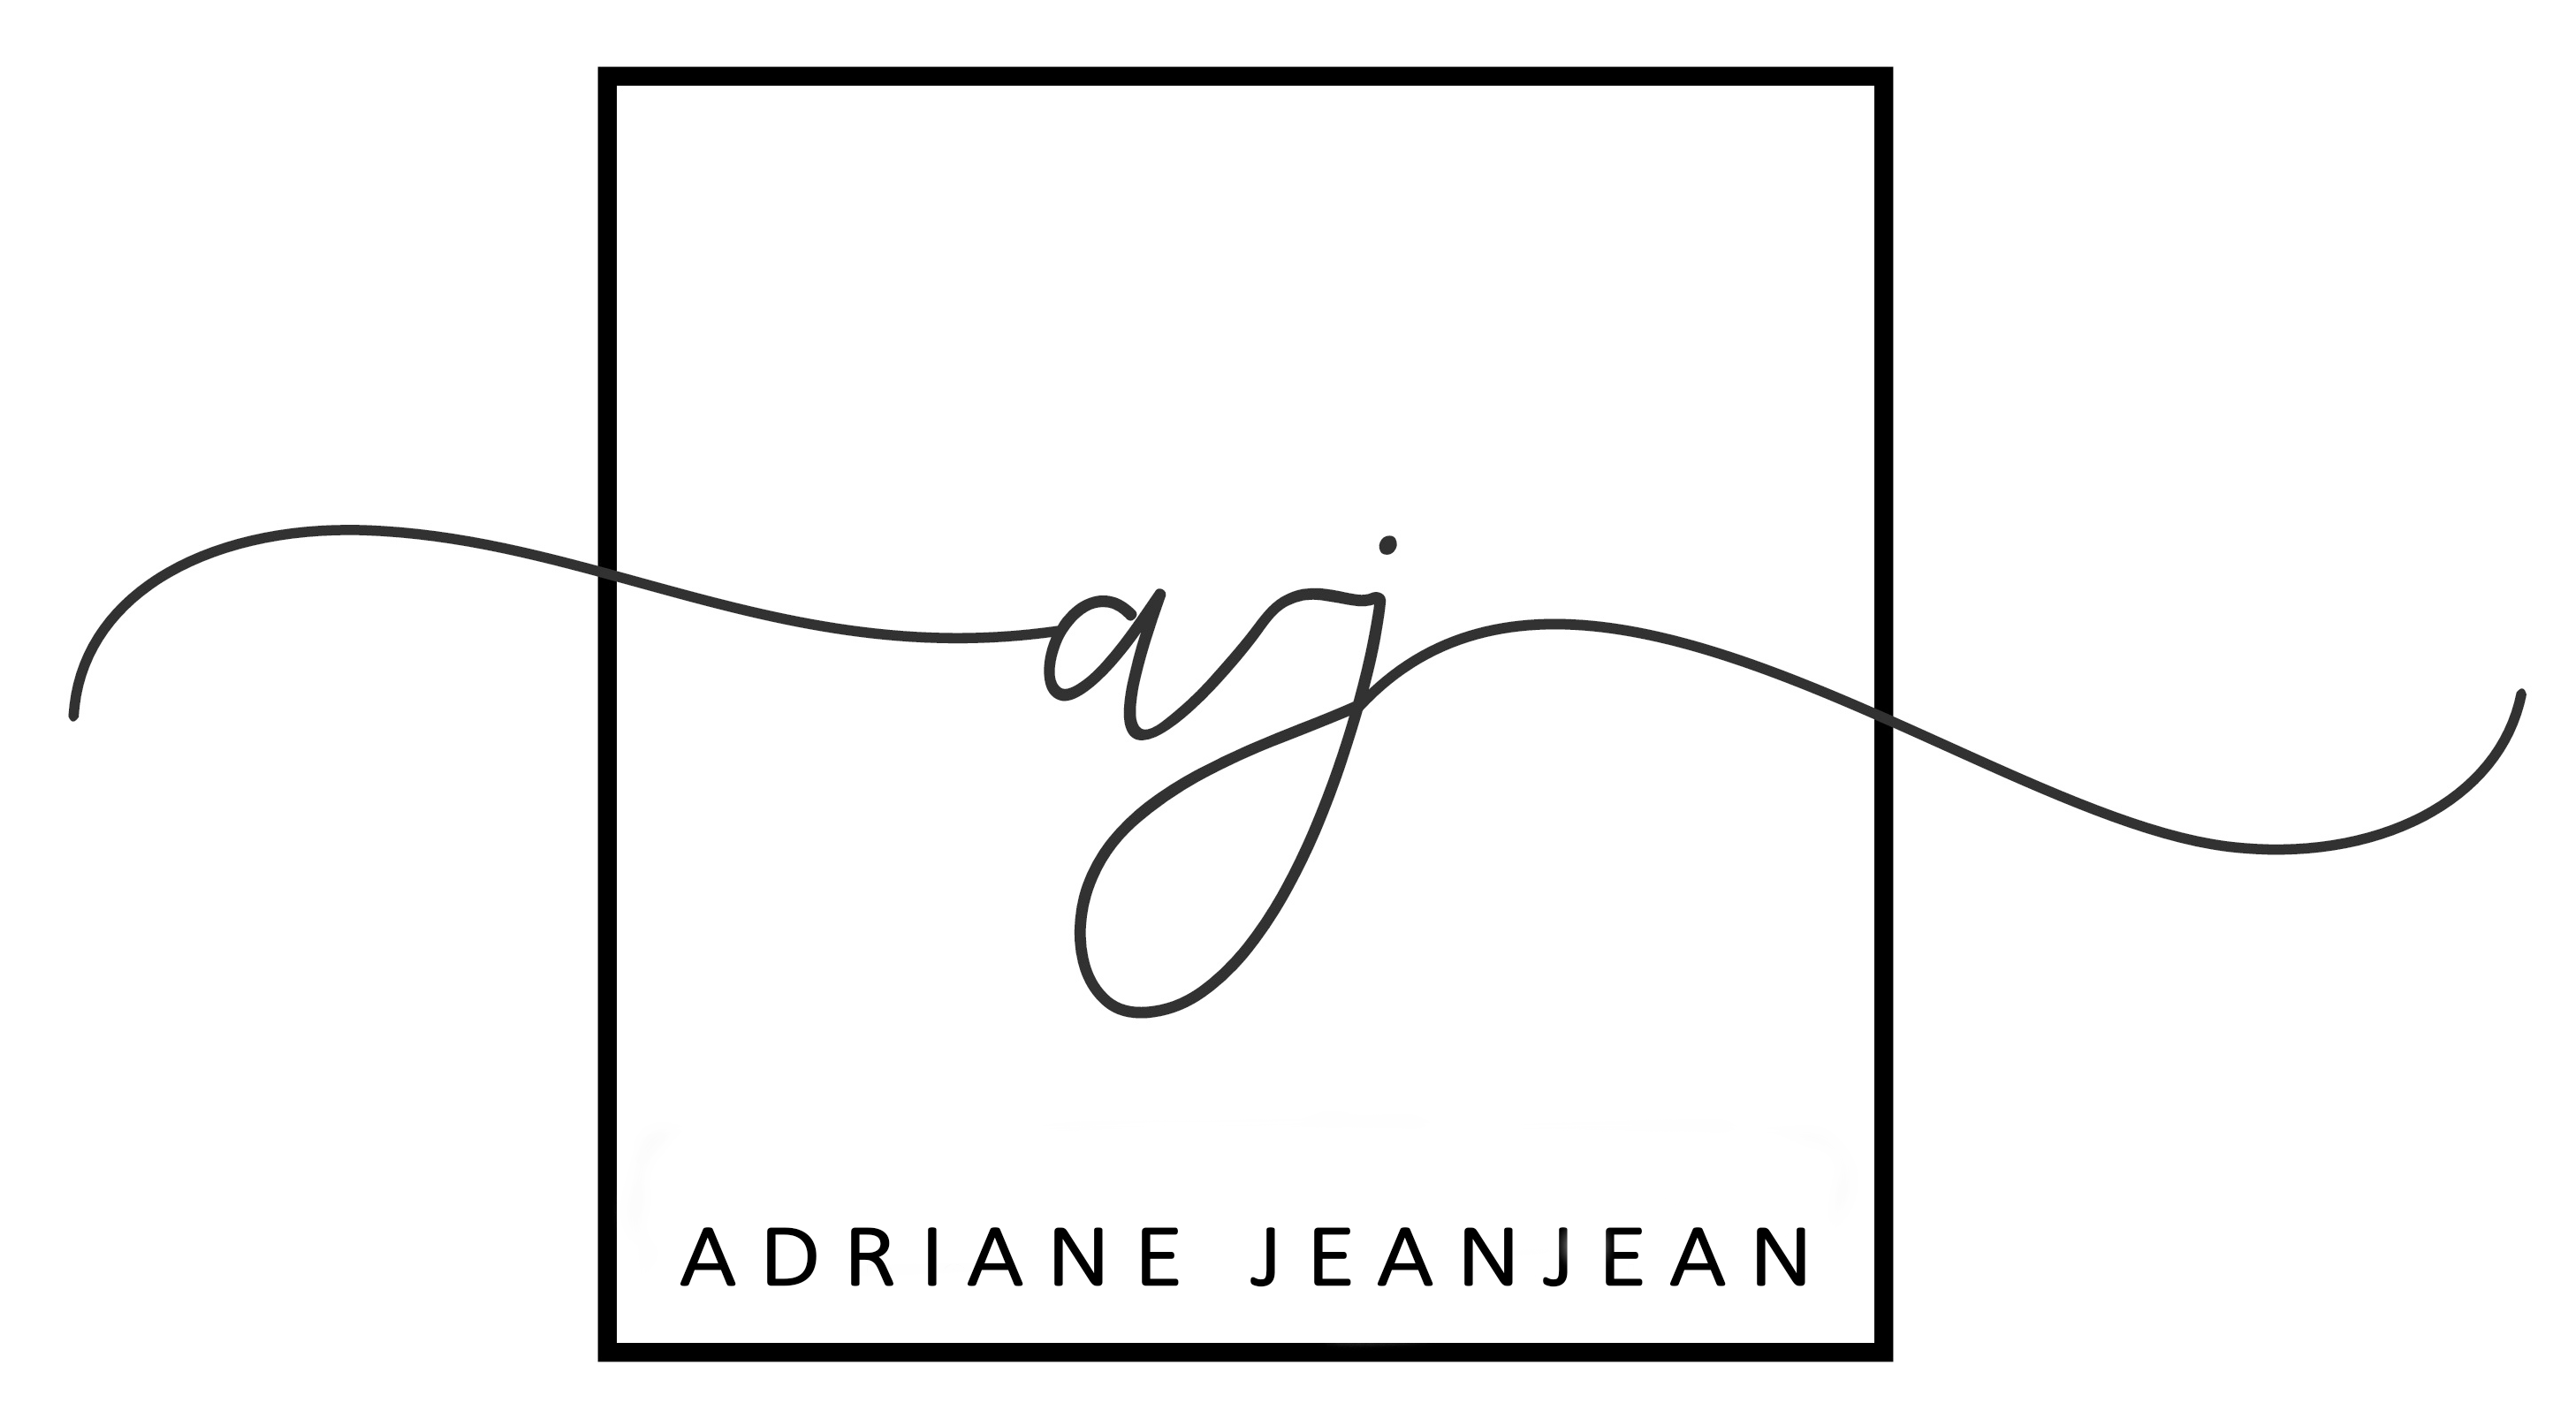 Adriane Jeanjean